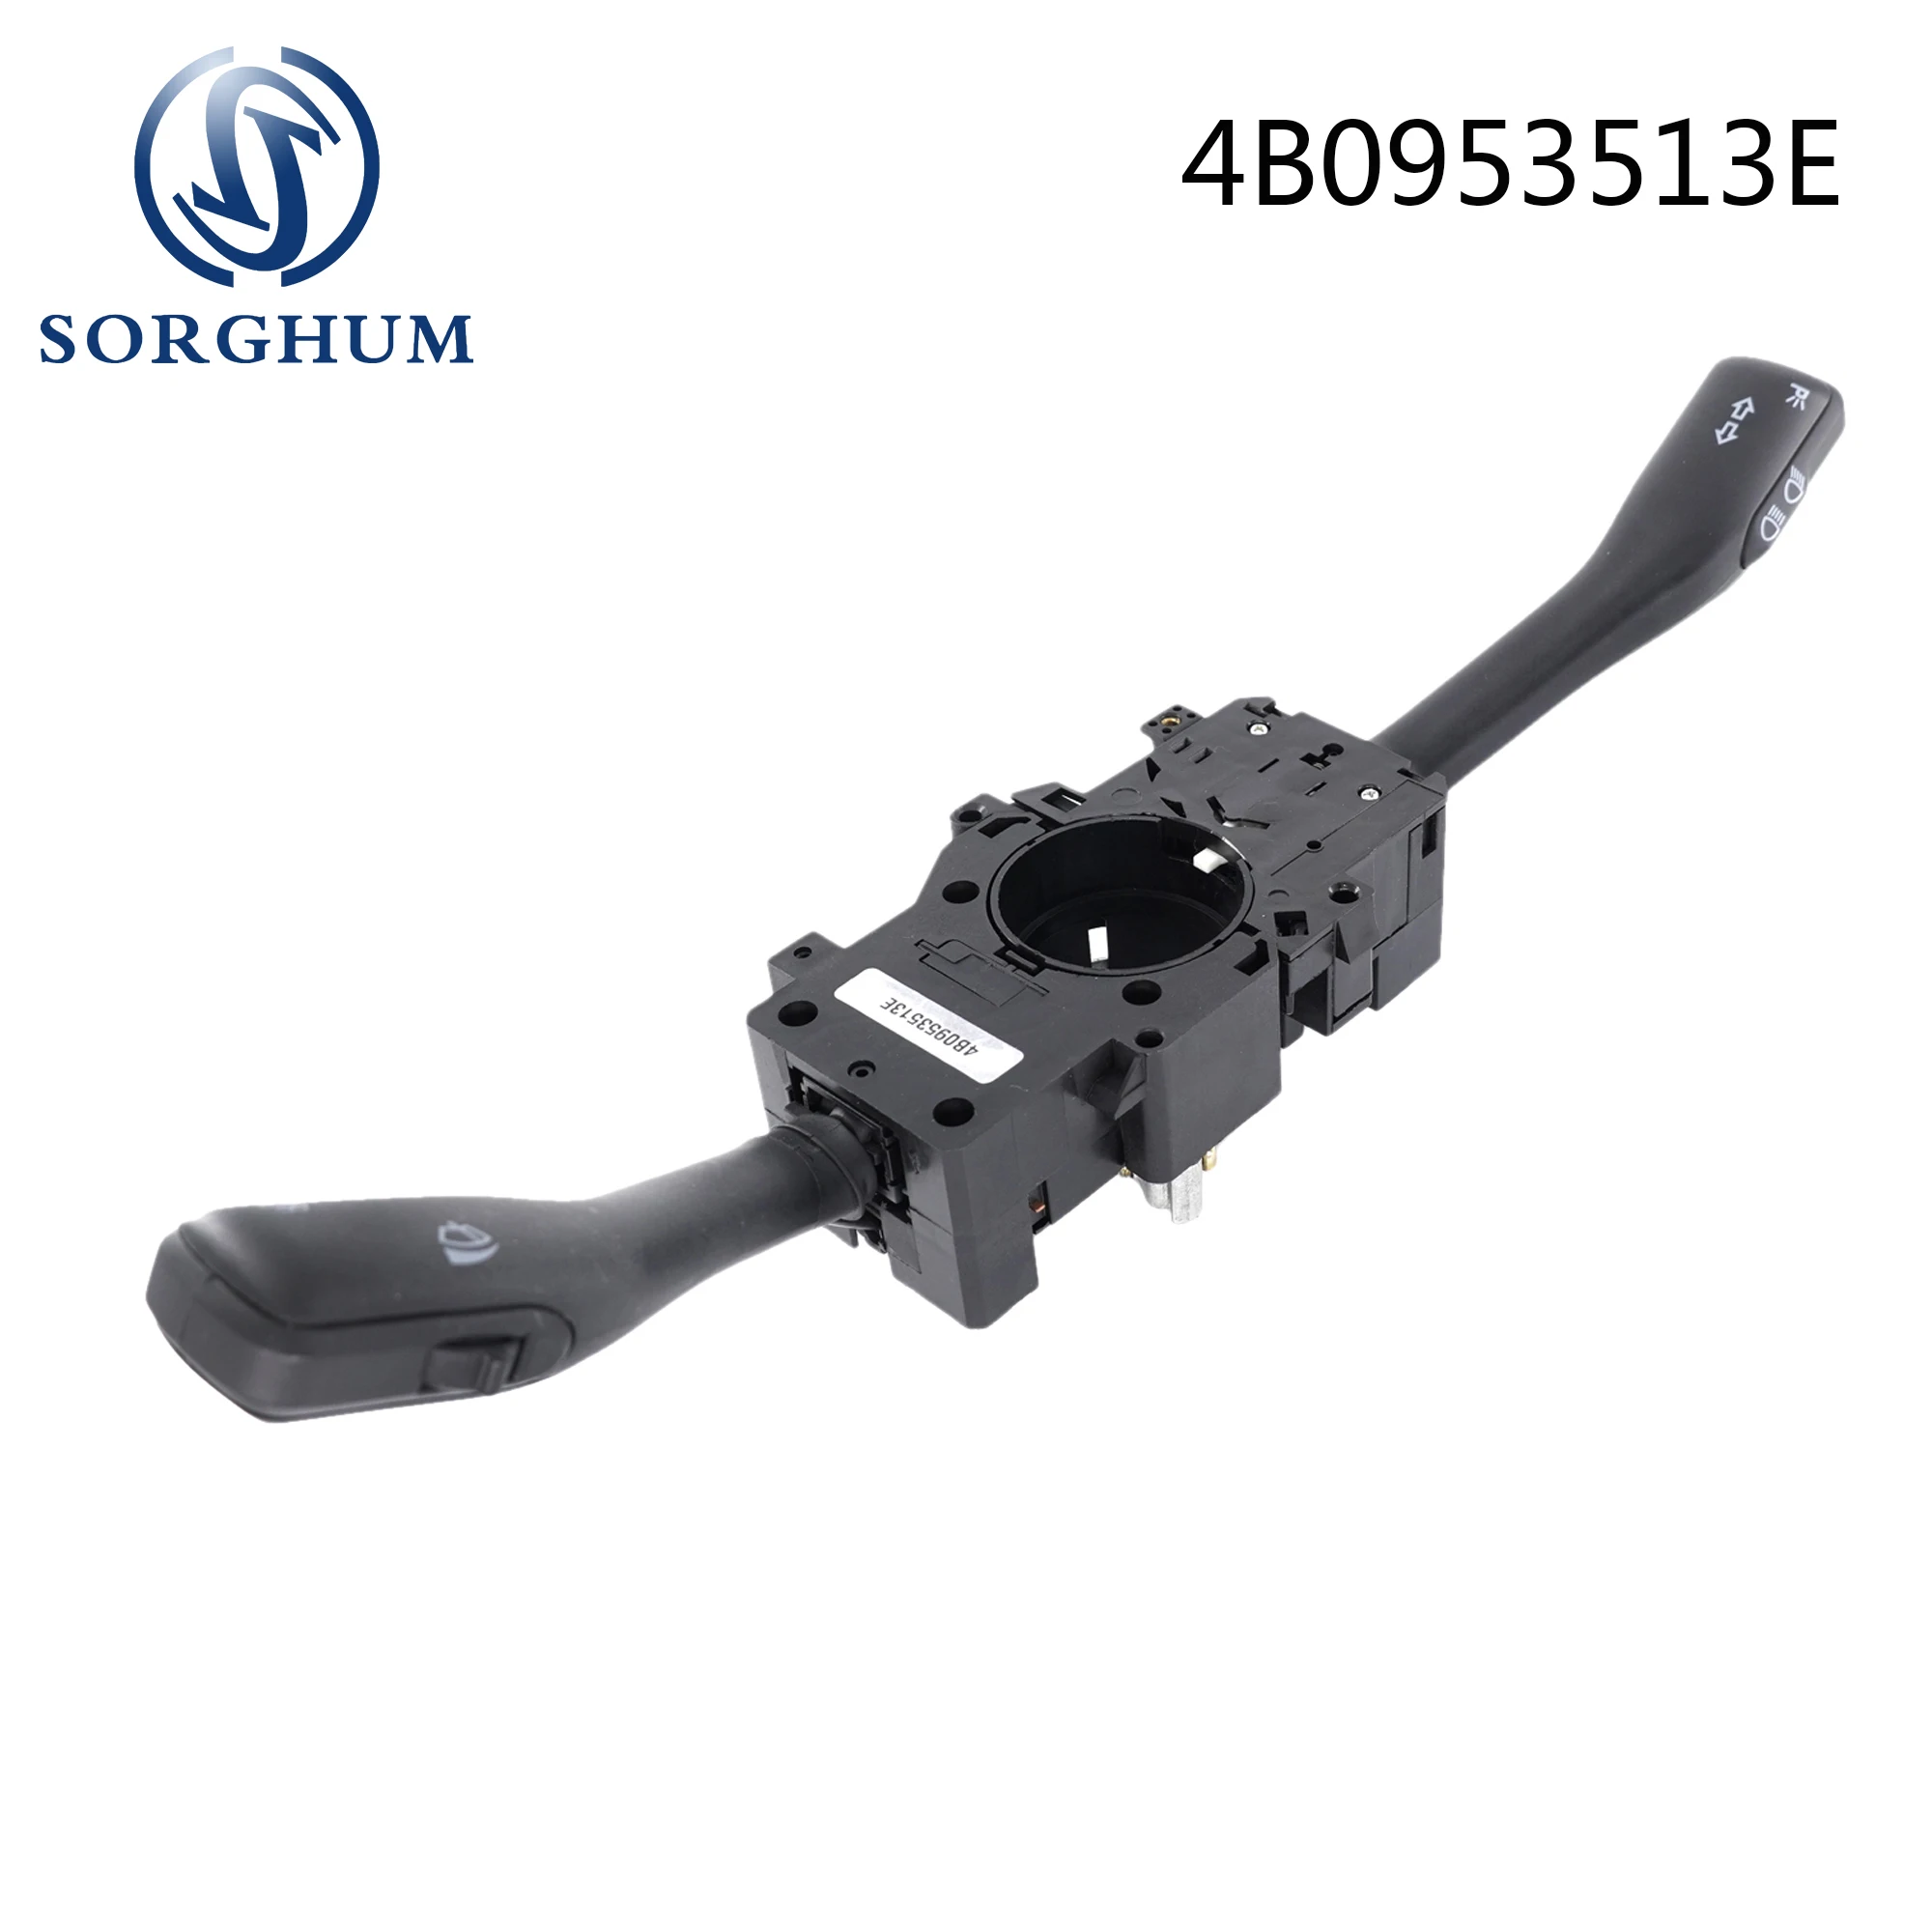 

Sorghum Combination Switch Windshield Wiper And Light For Volkswagen VW Bora Passat B5 B5.5 Golf MK4 4B0953513E 4B0 953 513 E